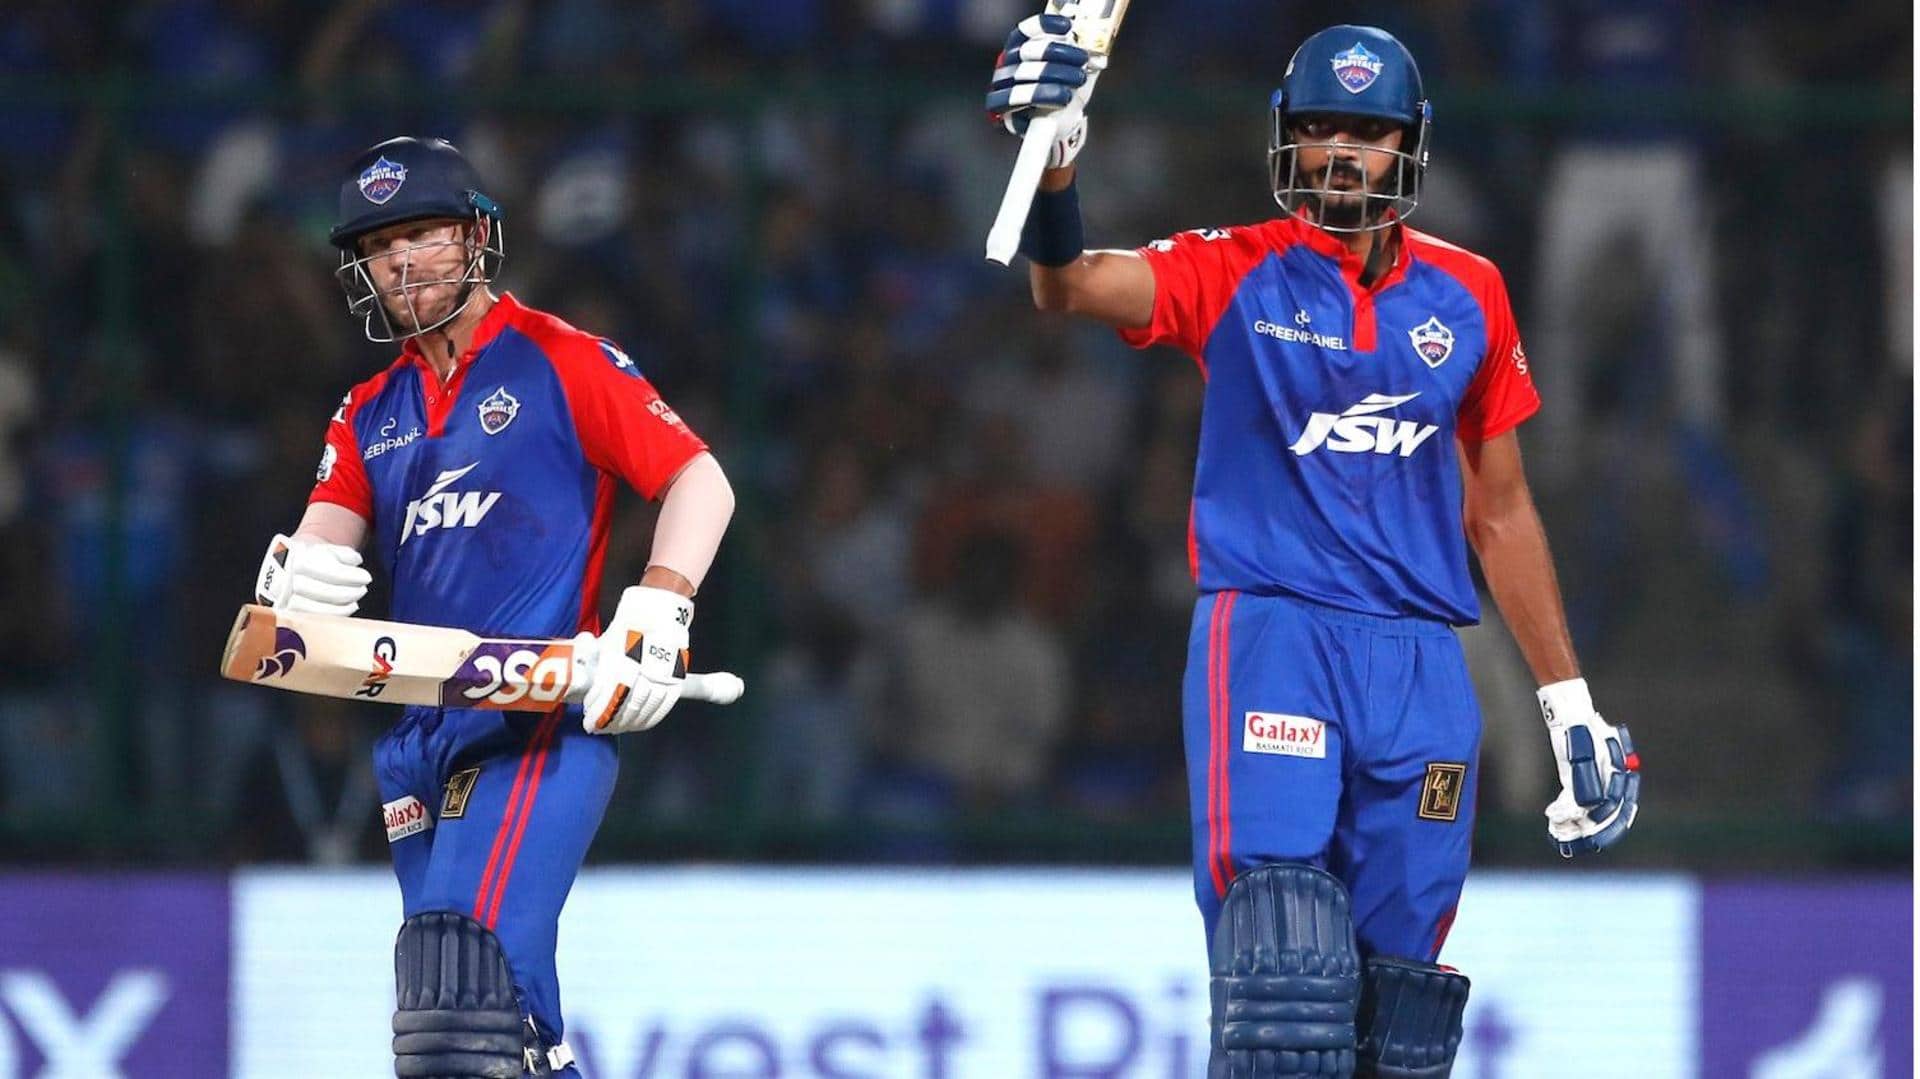 Axar Patel slams his maiden IPL half-century: Key stats